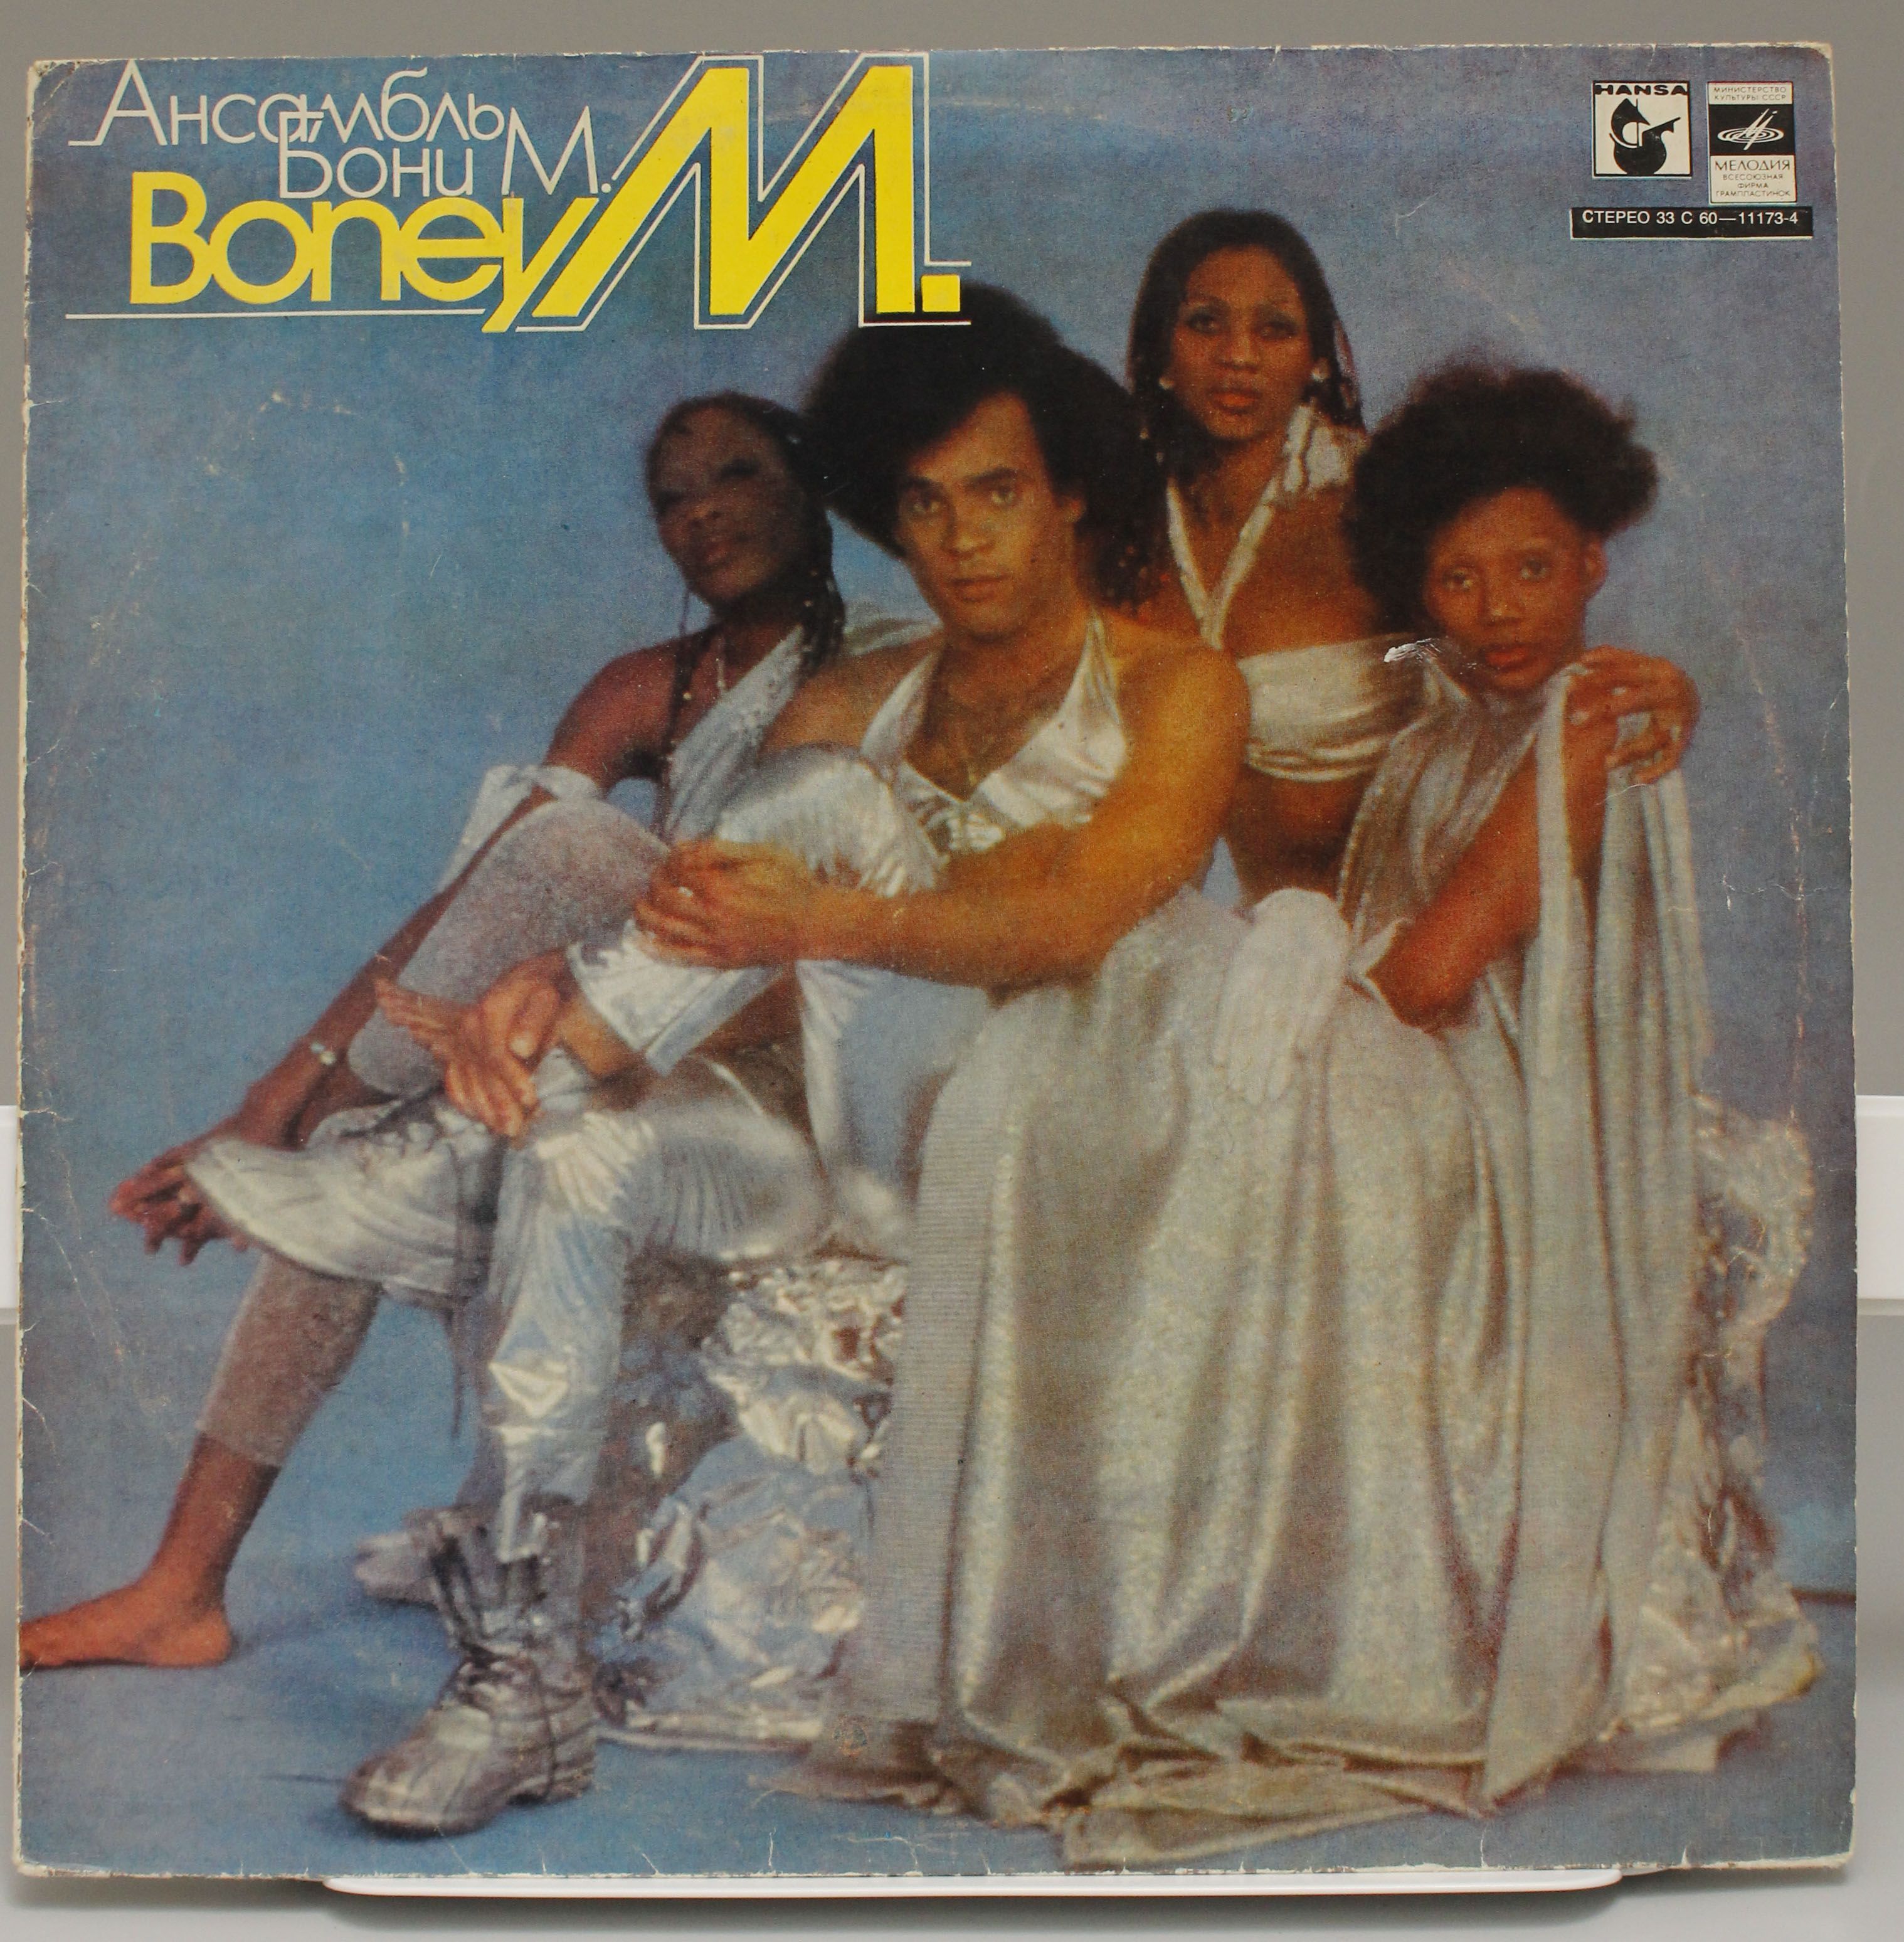 Бони м луна. Boney m пластинка. Boney m "Rivers of Babylon". Винил Бони м. Группа Бони м 1976.